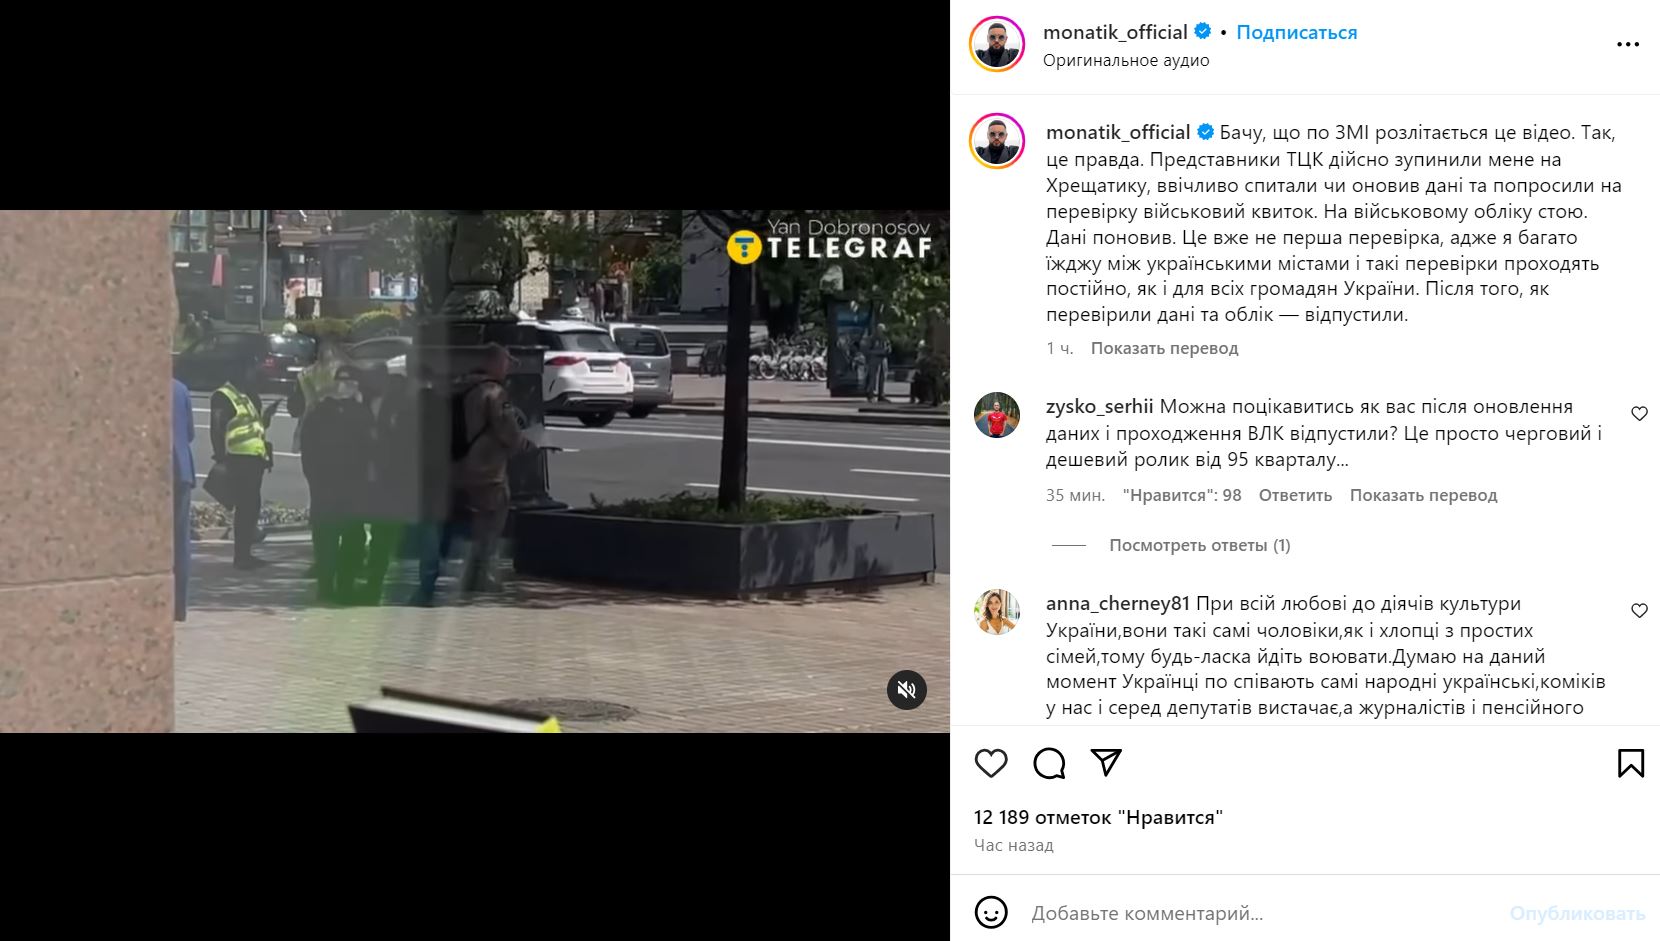 В центре Киева ТЦК с полицией остановила Монатика: появилась реакция певца — фото 1